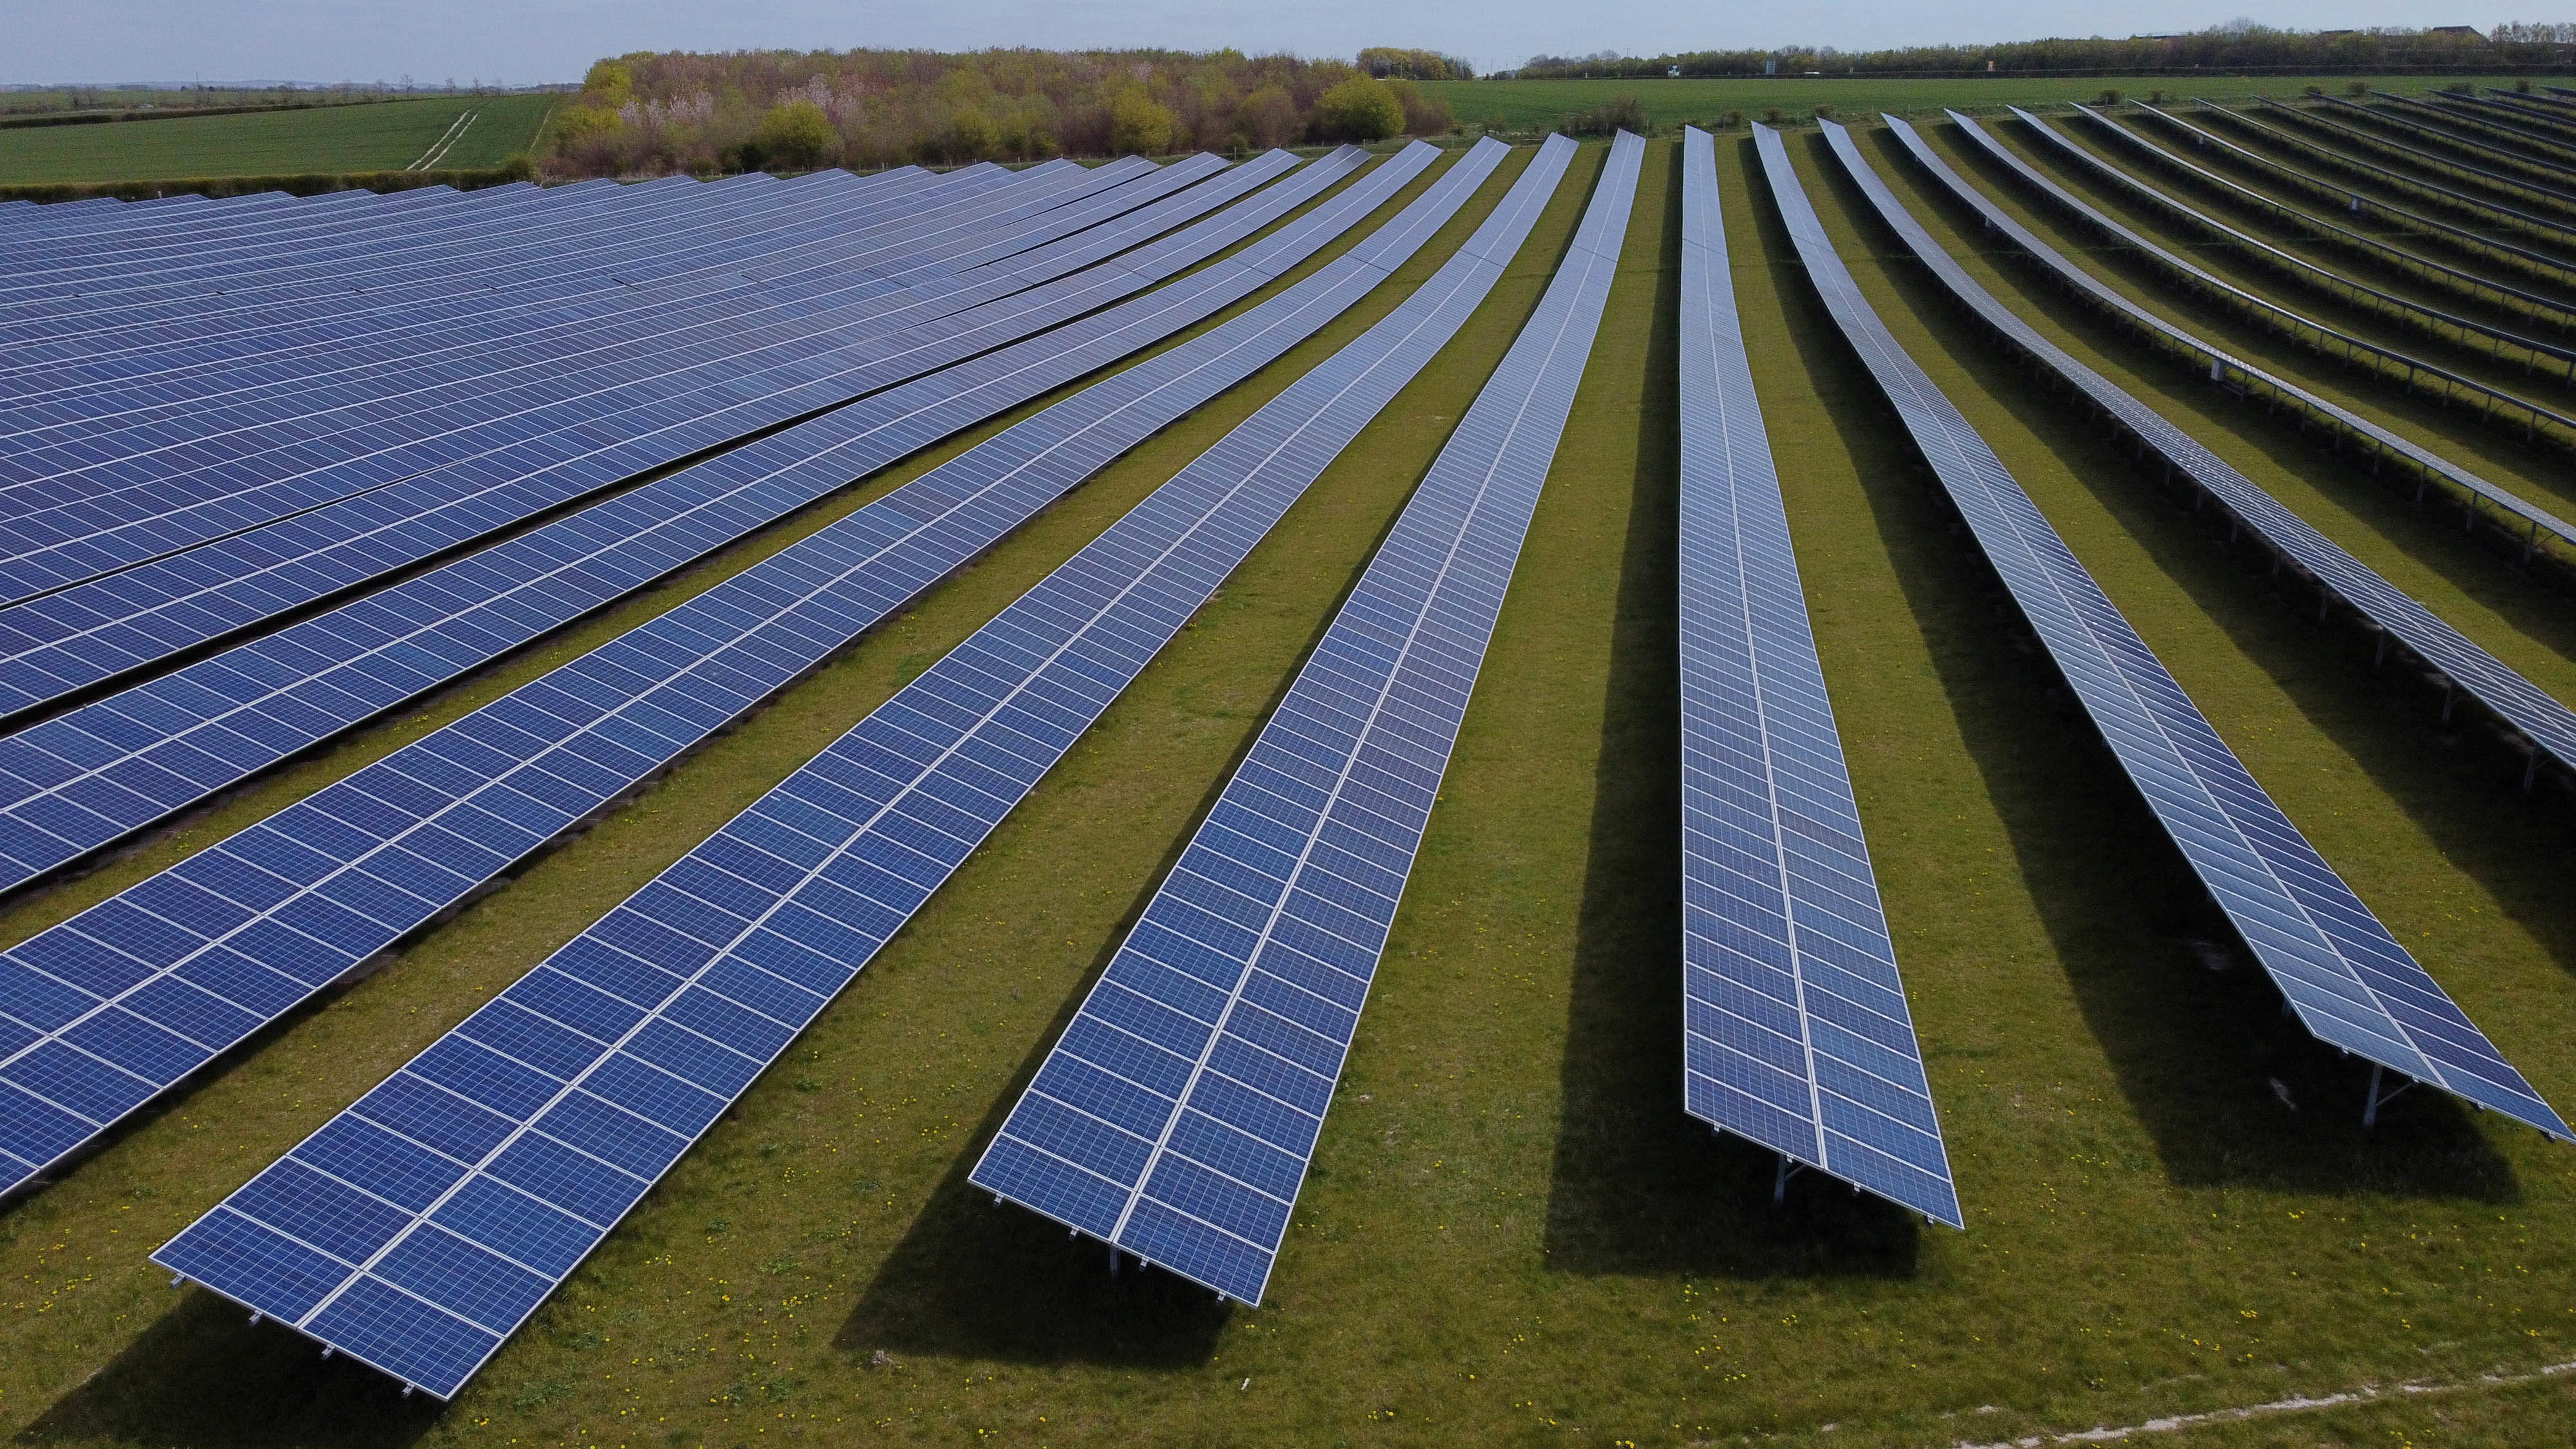 A field of solar panels is seen near Royston, Britain